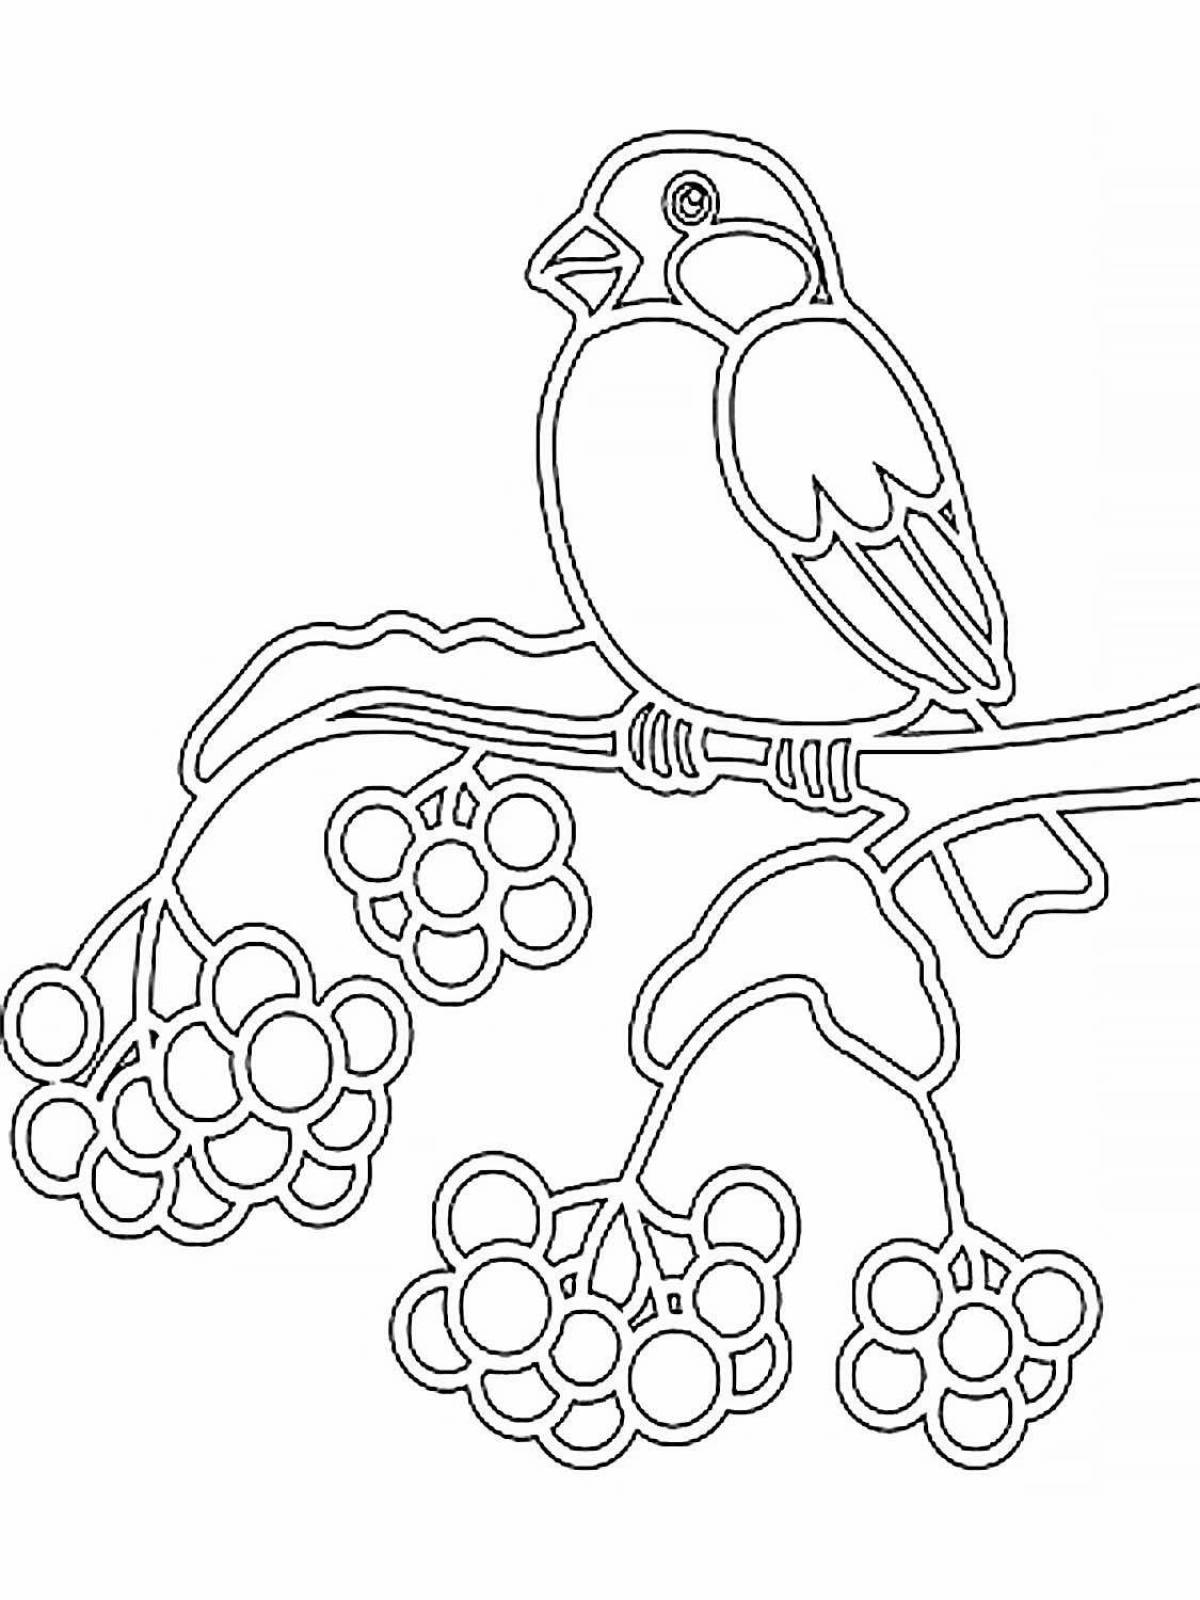 Cute drawing of a bullfinch on a rowan branch